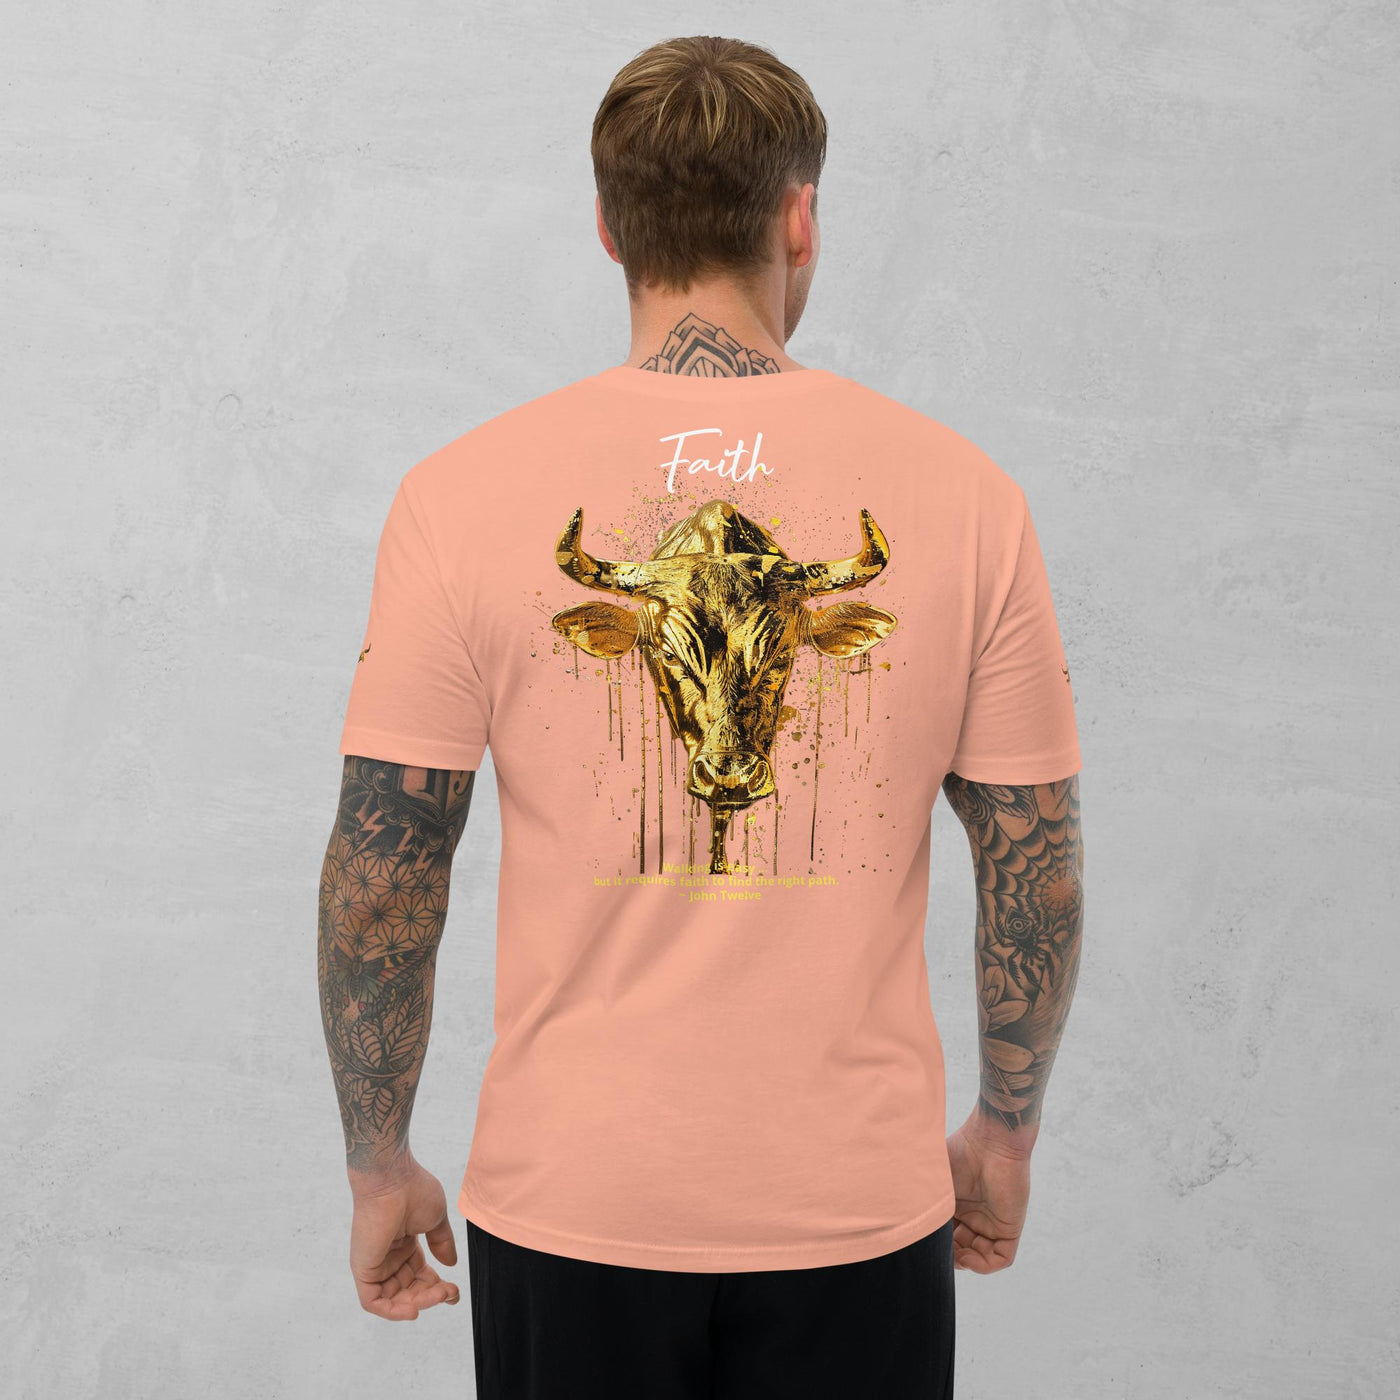 J.A Faith Gold Bull Men's Short Sleeve T-shirt